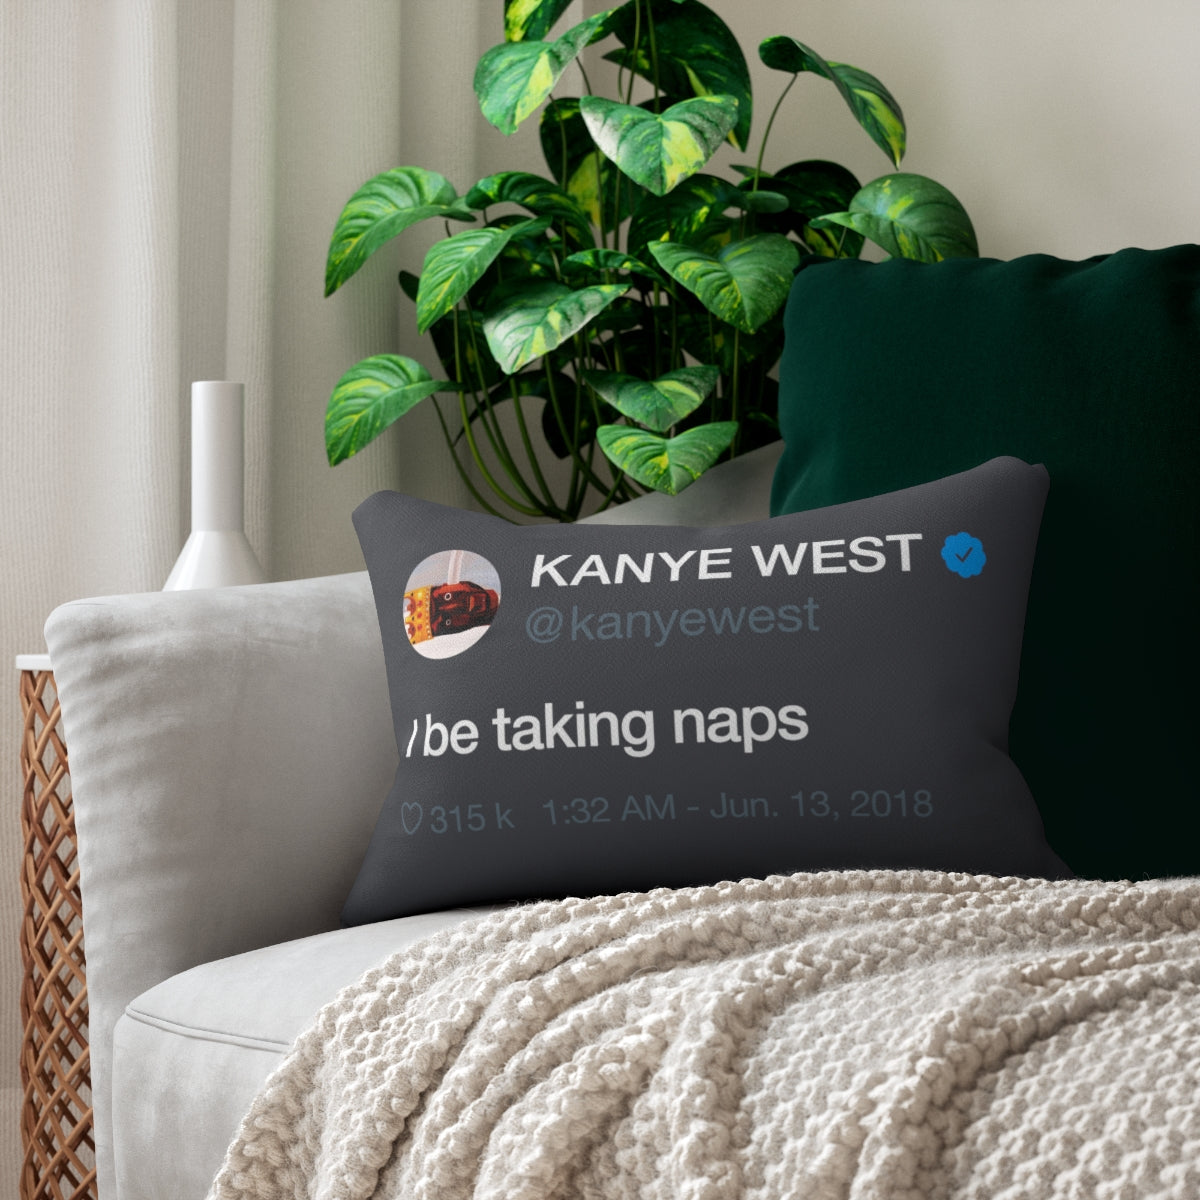 Kanye West Dark Naps Pillow + Pillow Sham - I be taking naps